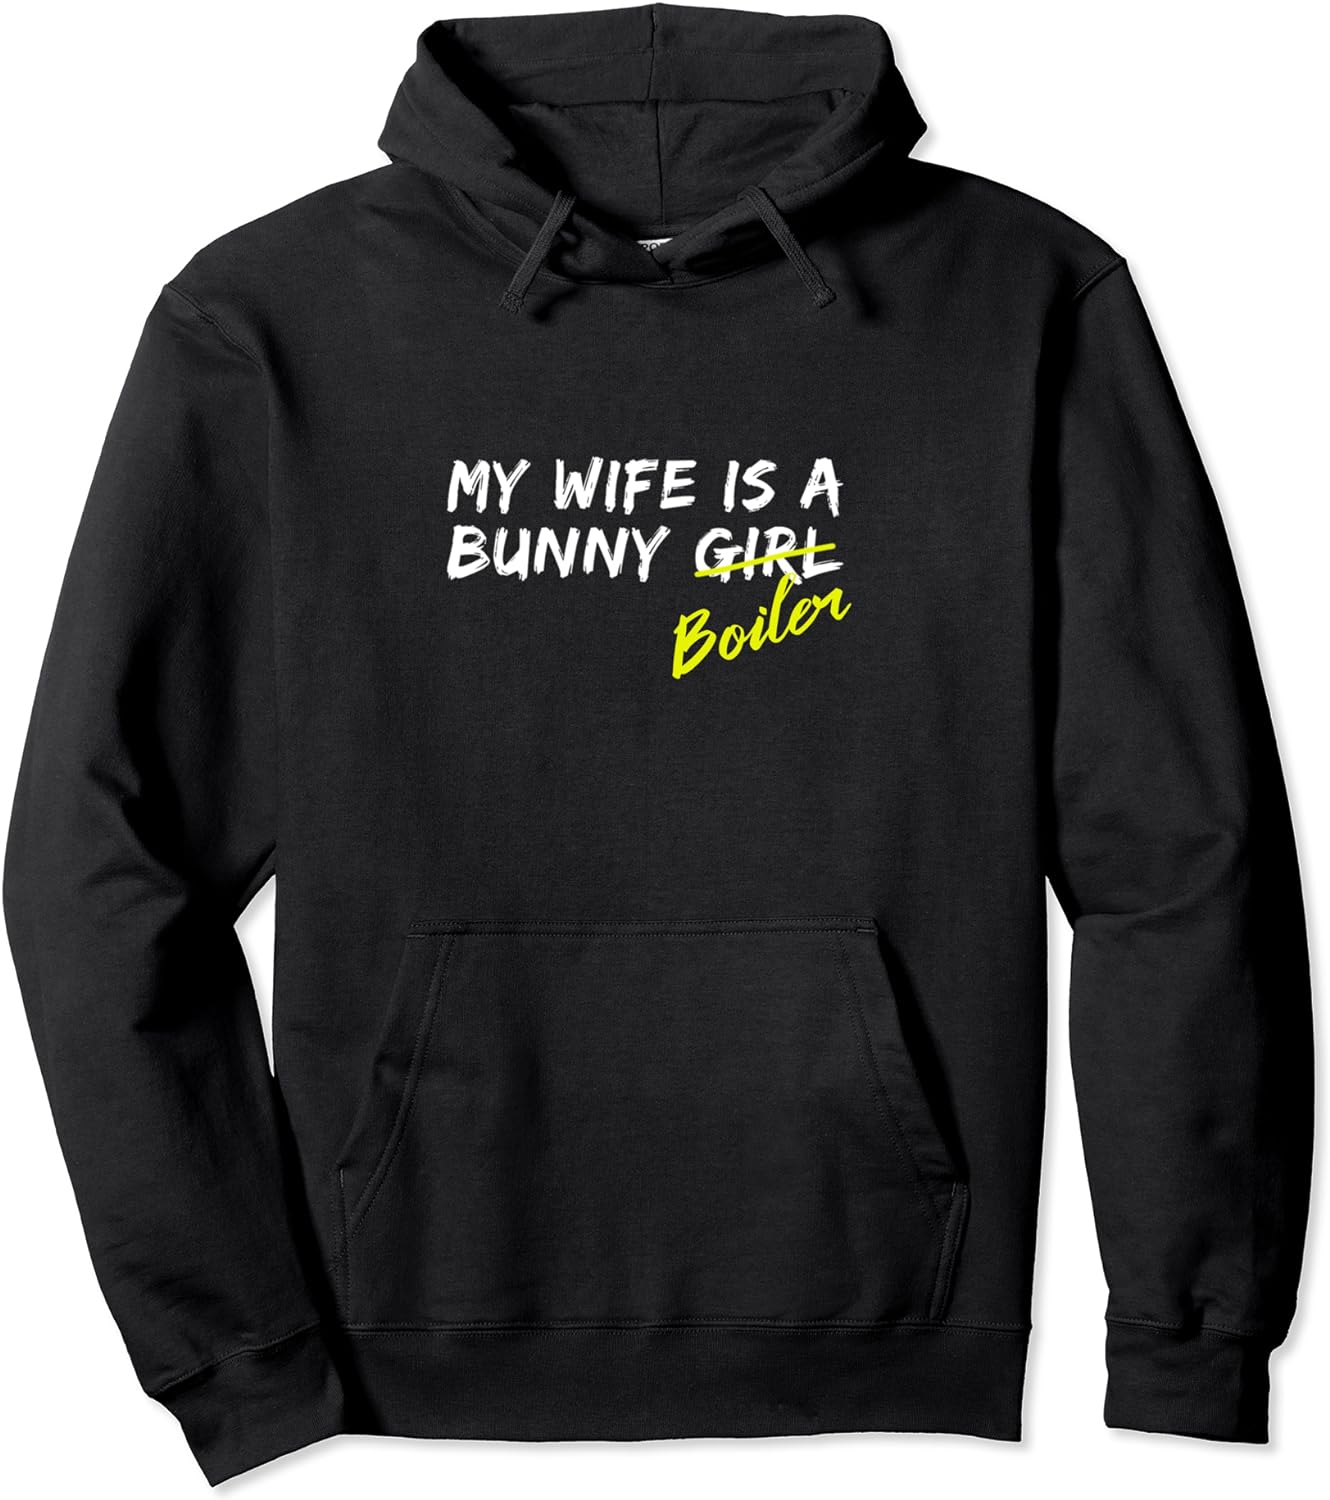 My Wife Is A Bunny Girl (Boiler) Hoodie